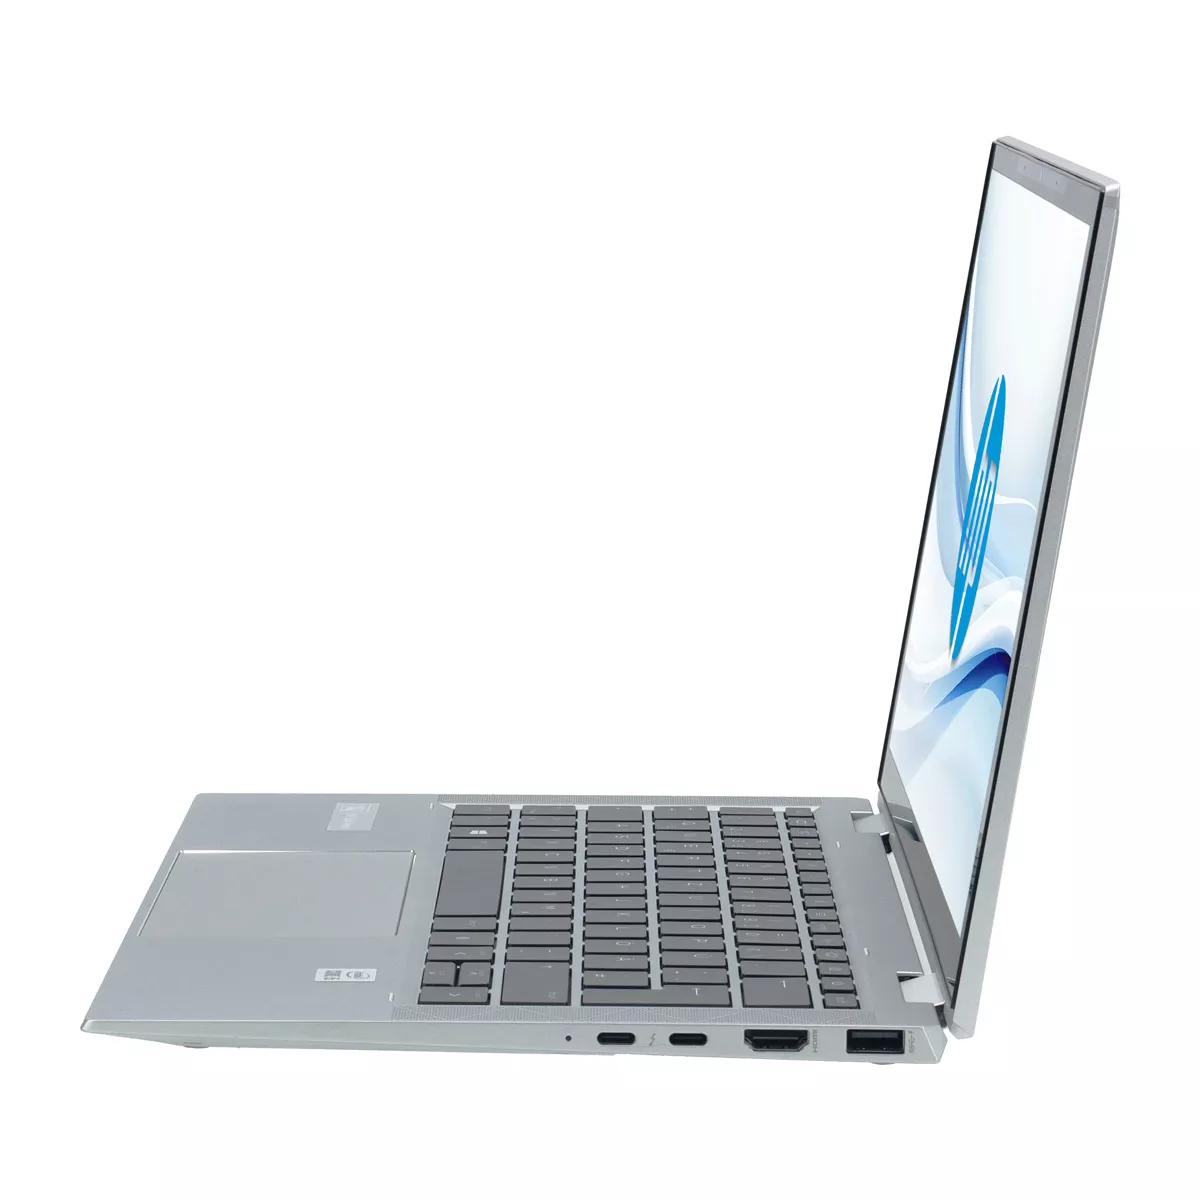 HP EliteBook x360 1030 G7 Core i5 10210U Touch 16 GB 500 GB M.2 nVME SSD Webcam B